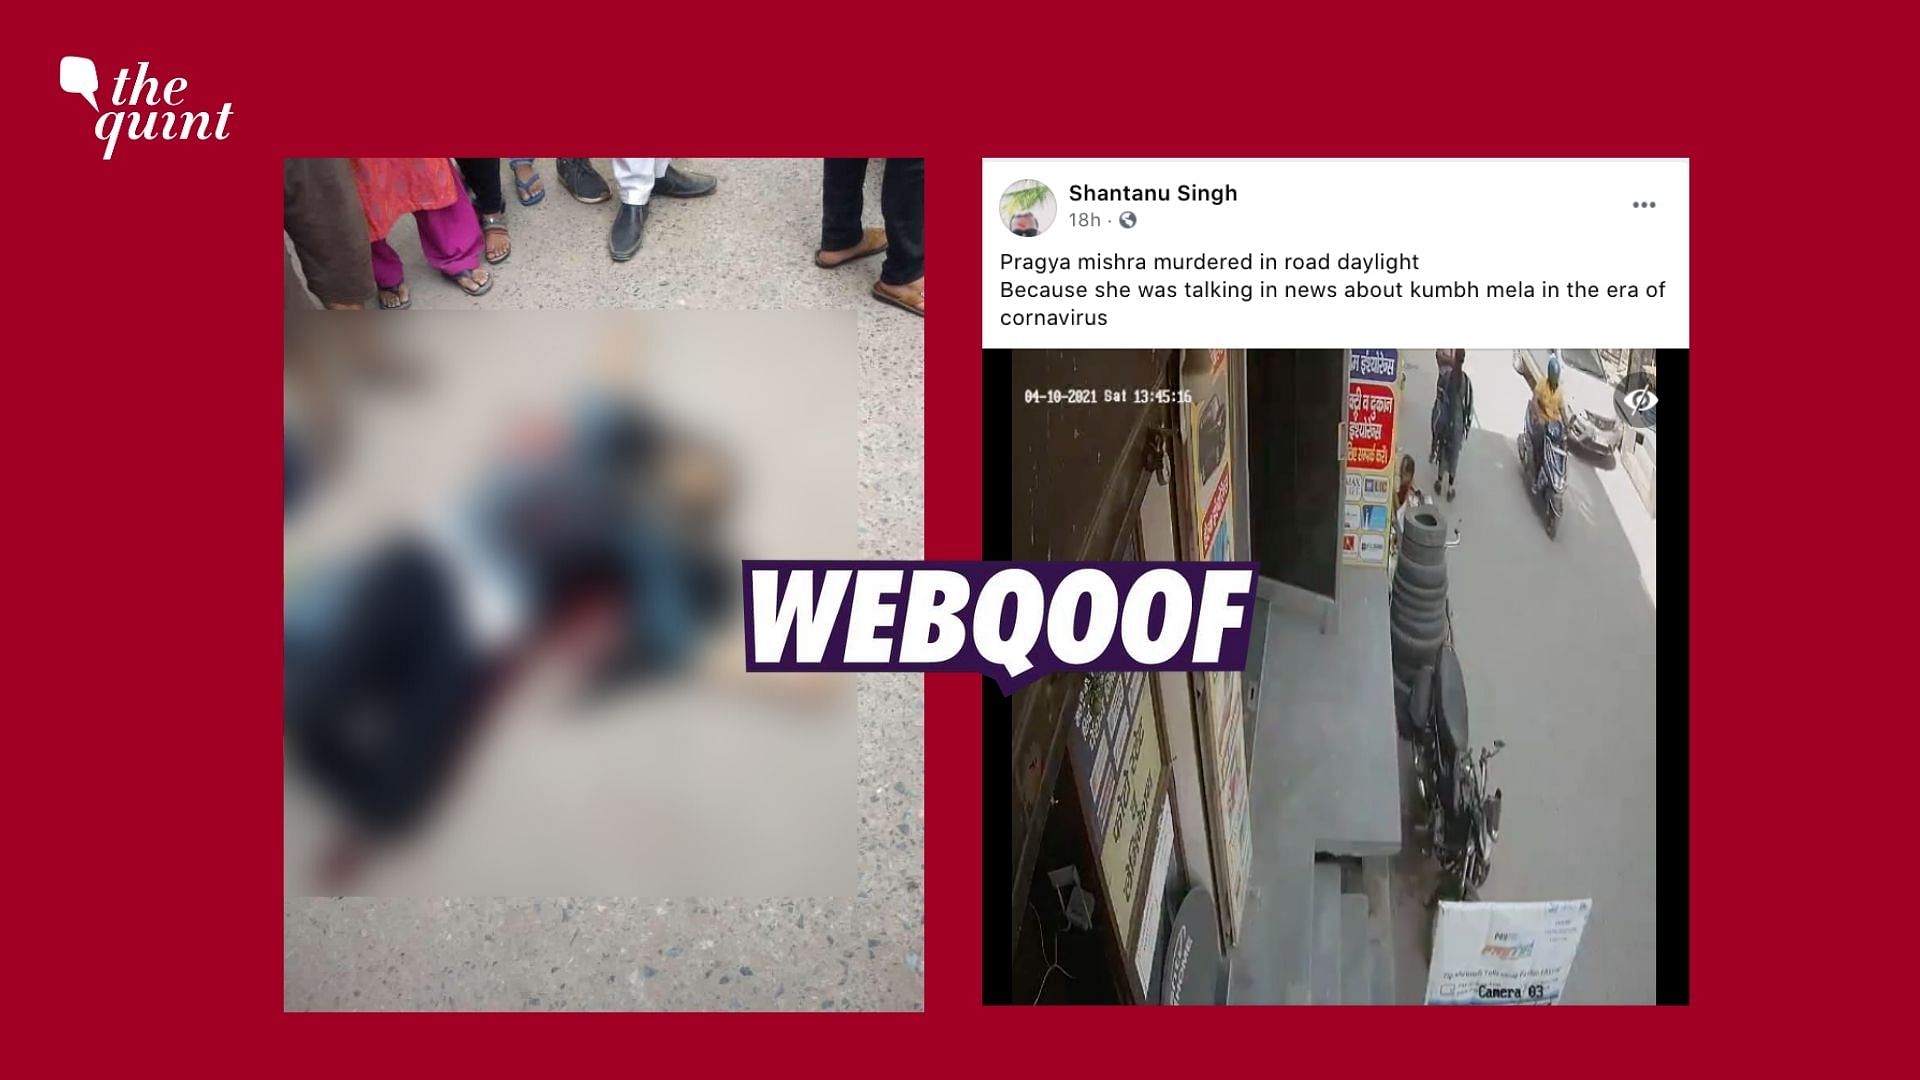 A viral video falsely claims to show murder of journalist Pragya Mishra in broad daylight for speaking about <a href="https://www.thequint.com/coronavirus/30-sadhus-are-covid-positive-niranjani-akhada-to-leave-kumbh-mela">Kumbh mela</a> amid coronavirus pandemic.